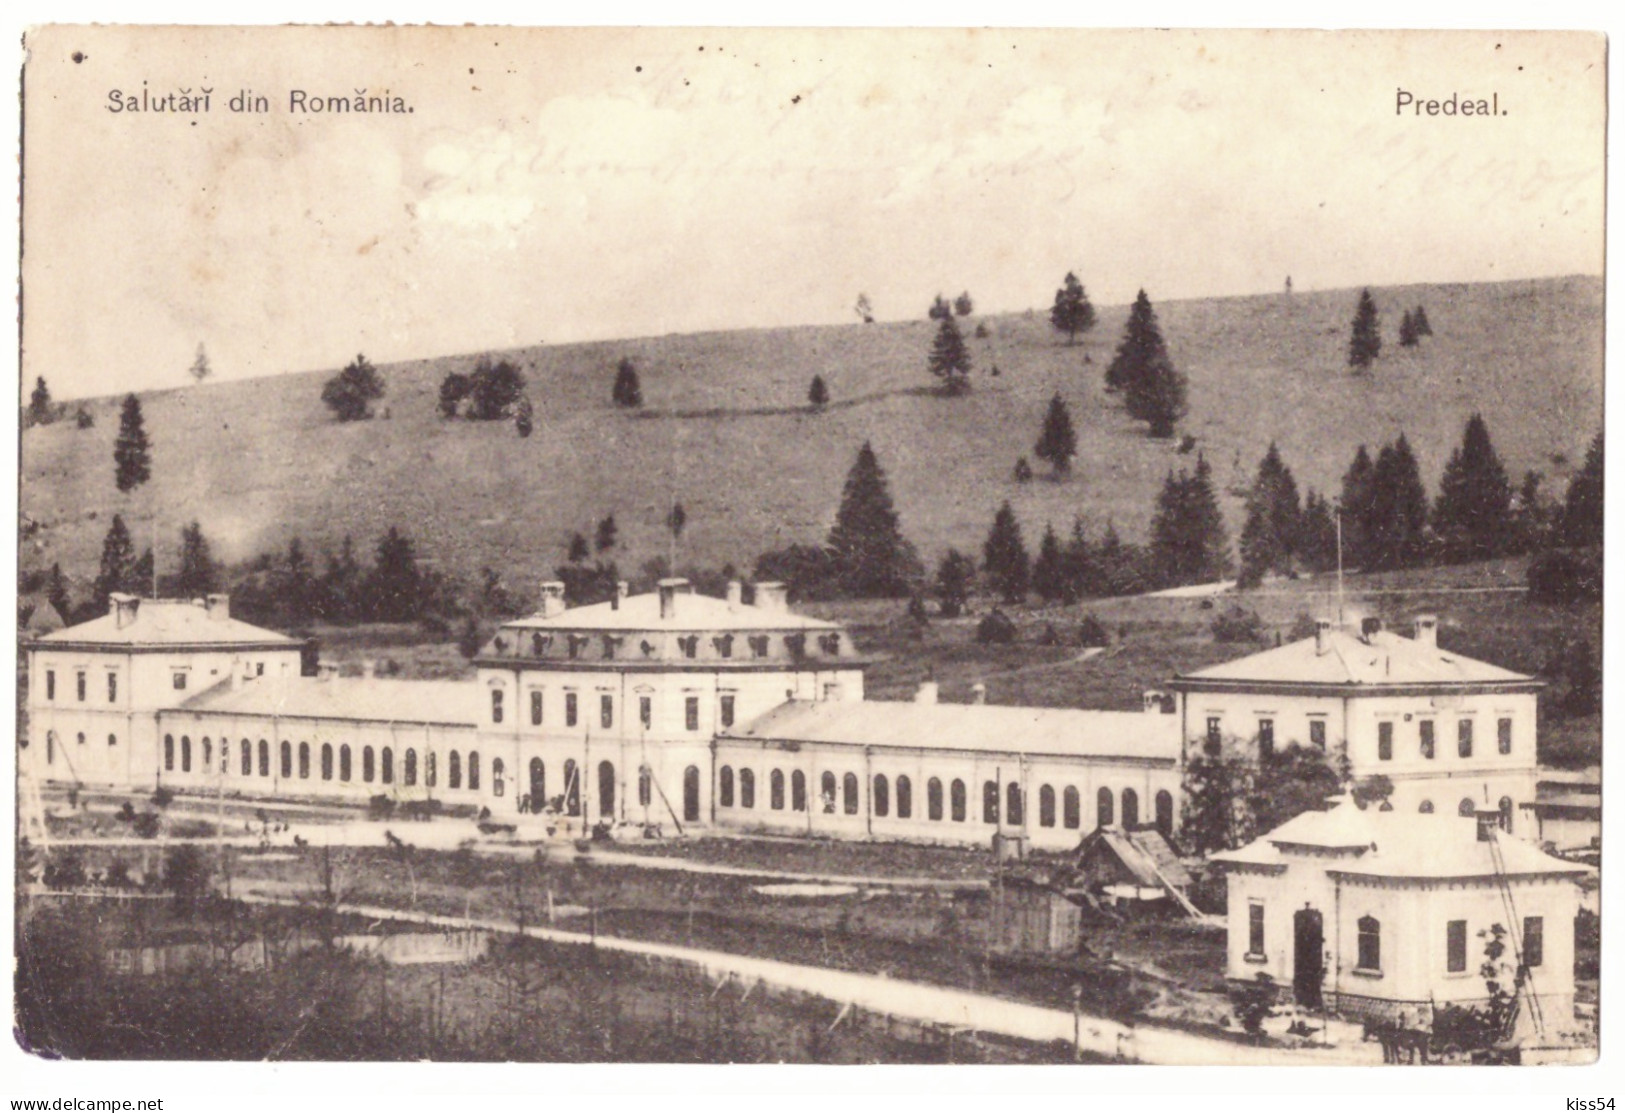 RO 83 - 21110 PREDEAL, Brasov, Romania - Old Postcard - Used - 1906 - Roemenië